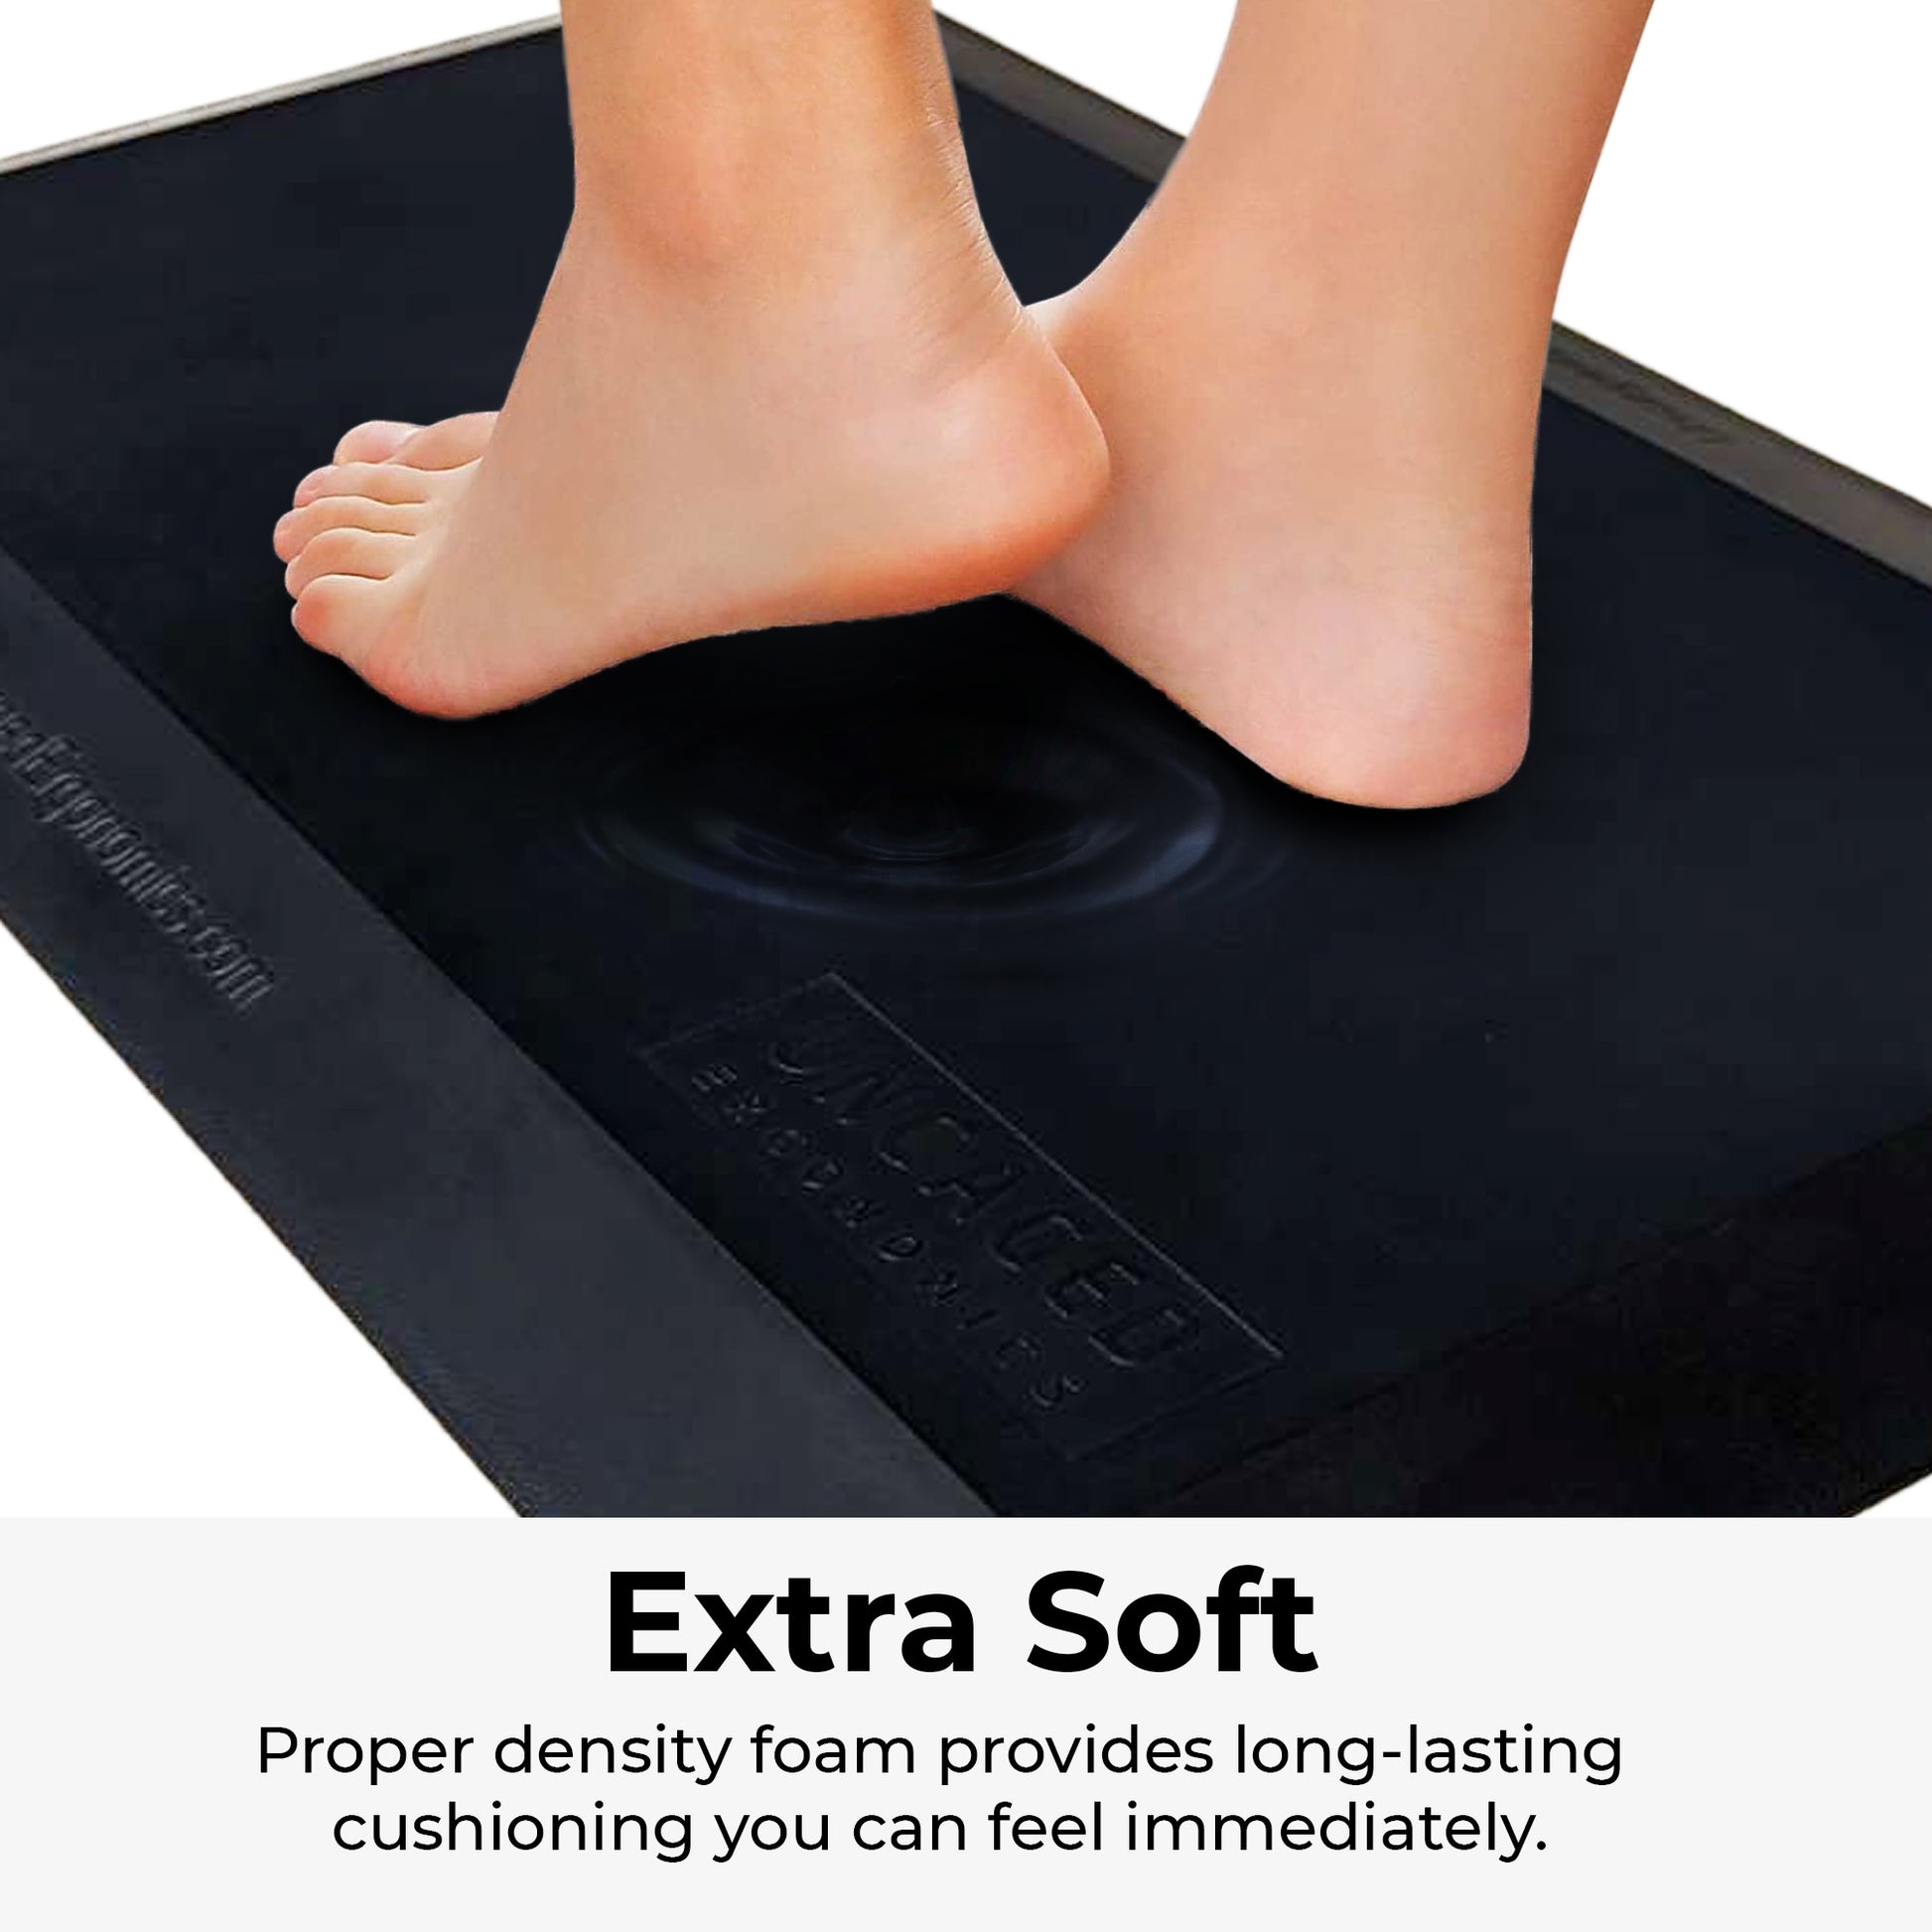 20x34” Anti-fatigue Mat comfort mat for standing desks industrial office –  UncagedErgonomics